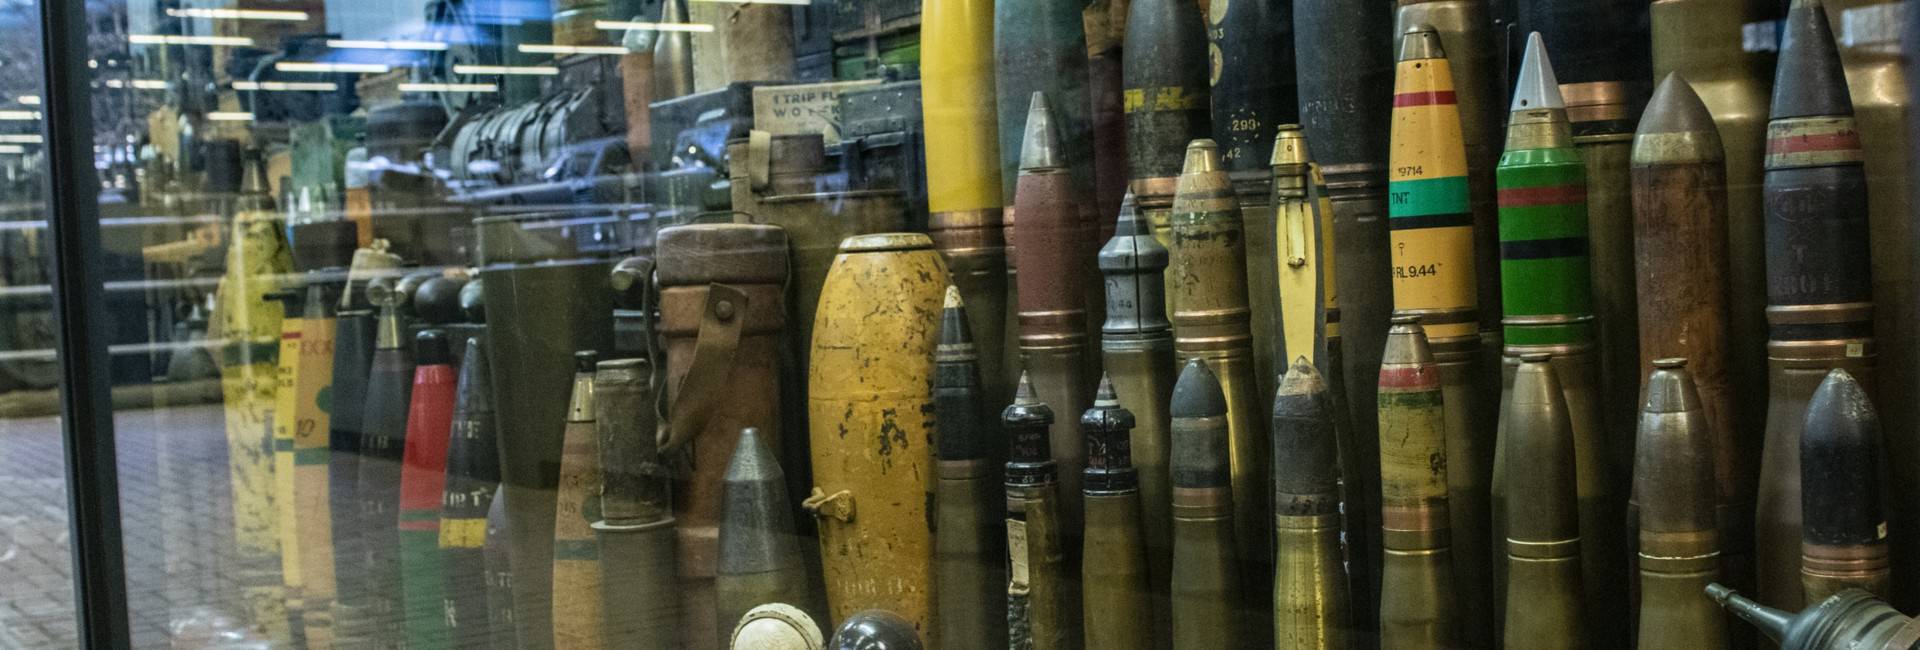 oorlogsmuseum - 1000 Bomben und Granaten